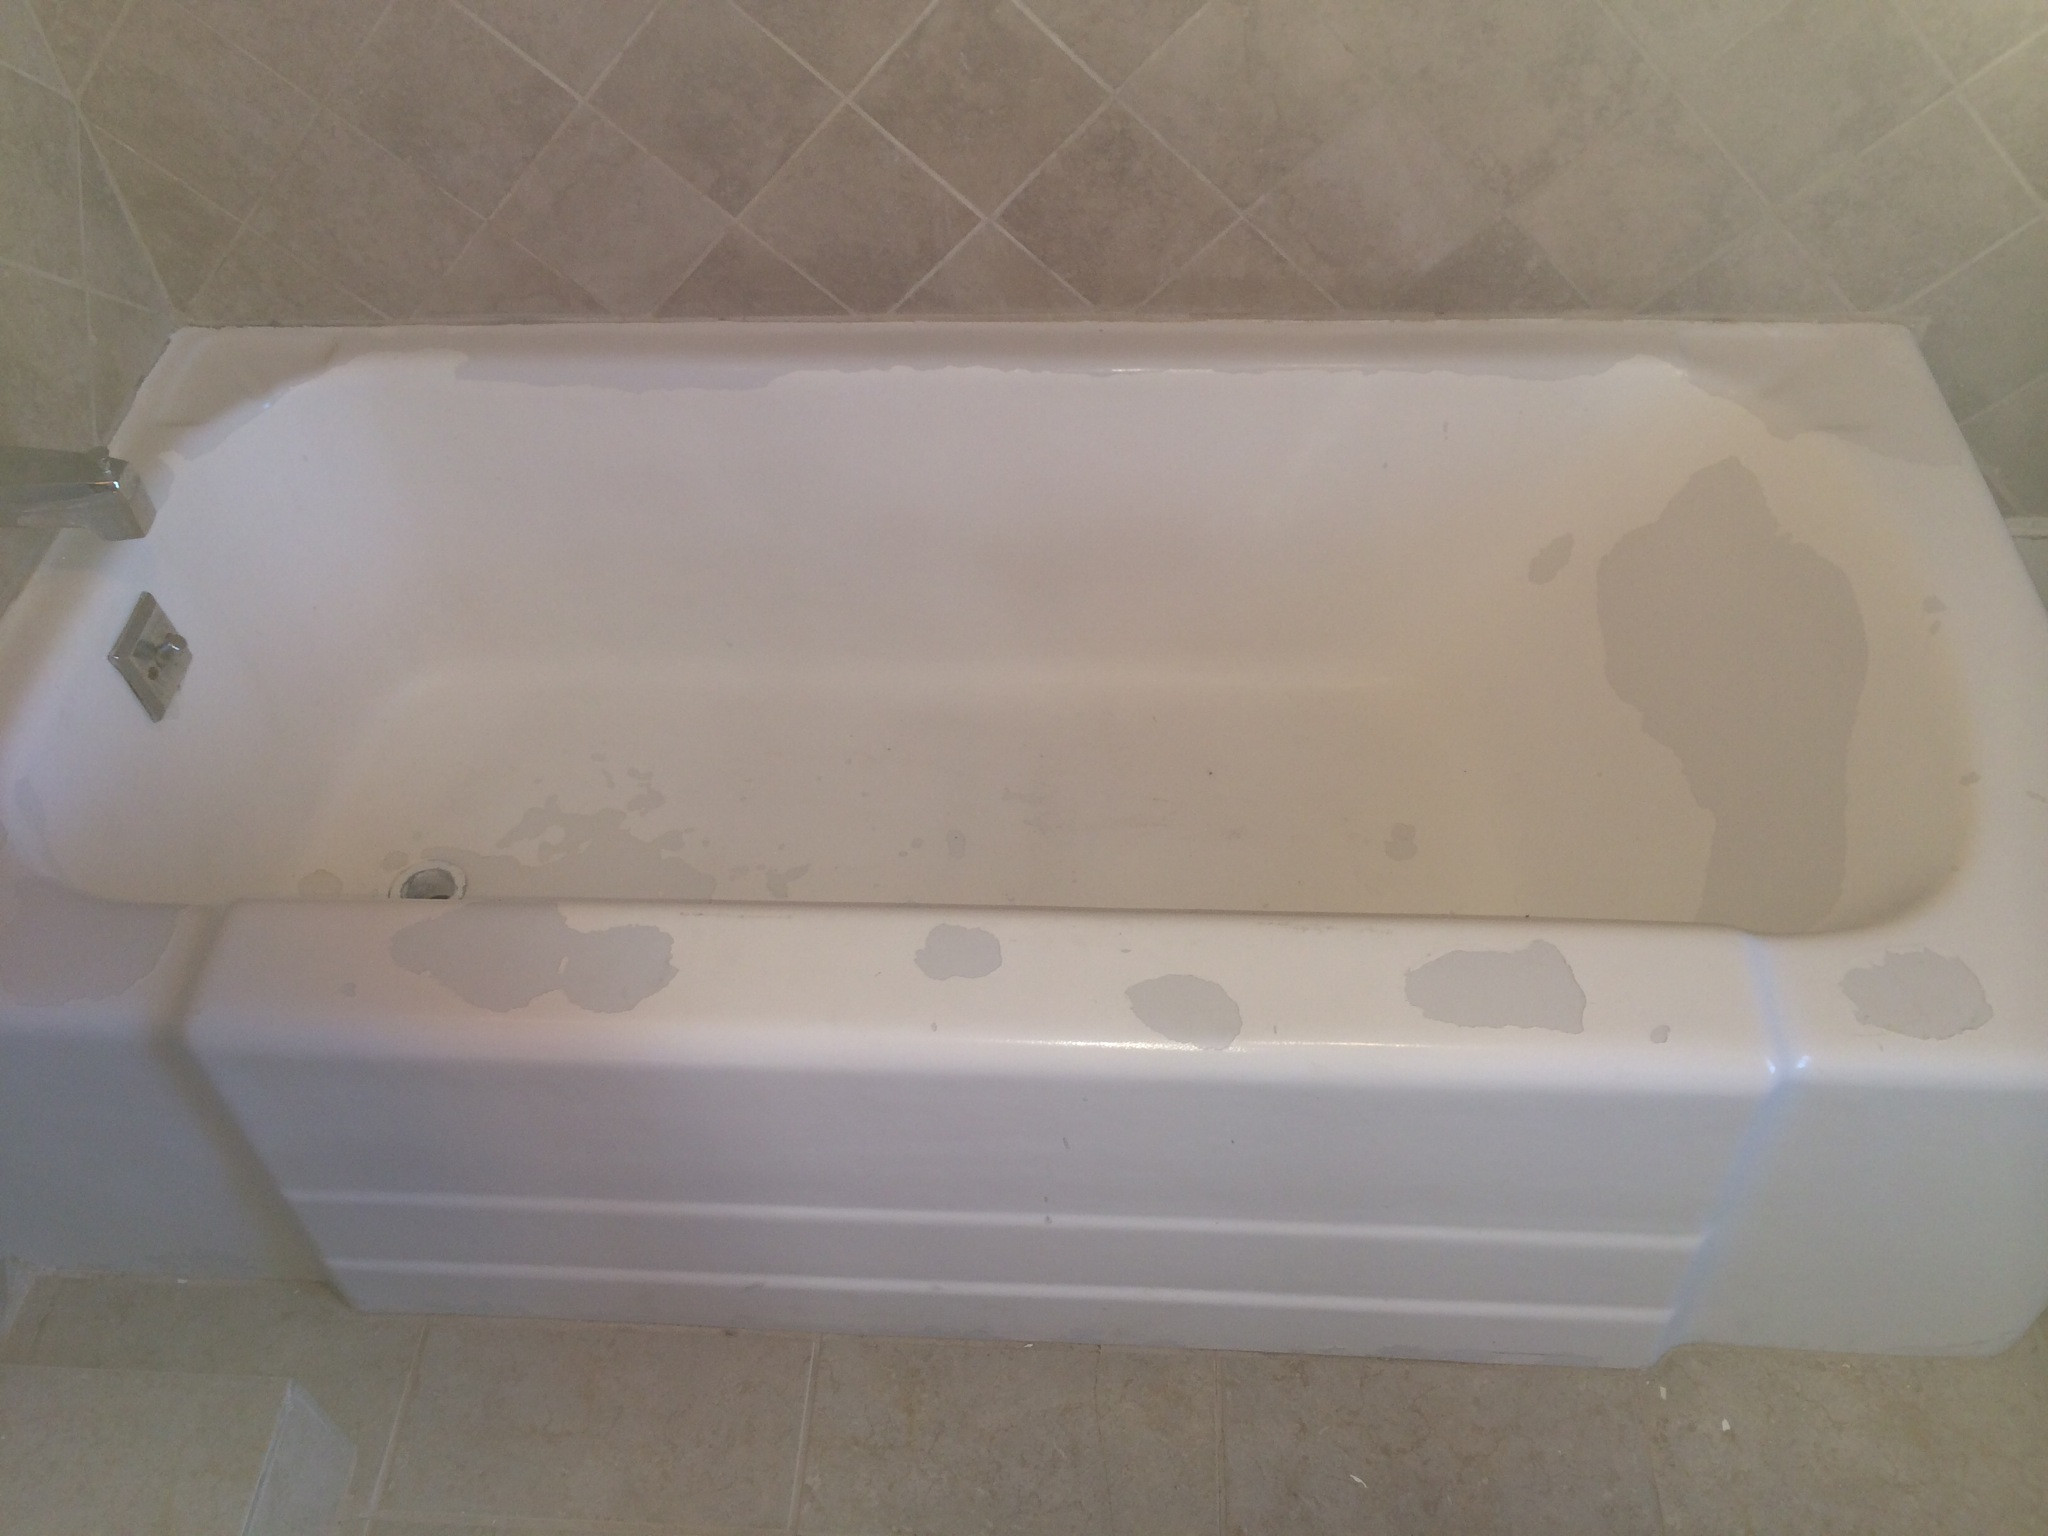 Best ideas about DIY Bathtub Refinishing Kit Reviews
. Save or Pin Blog Archives Total Bathtub Refinishing Tub Reglazing Now.